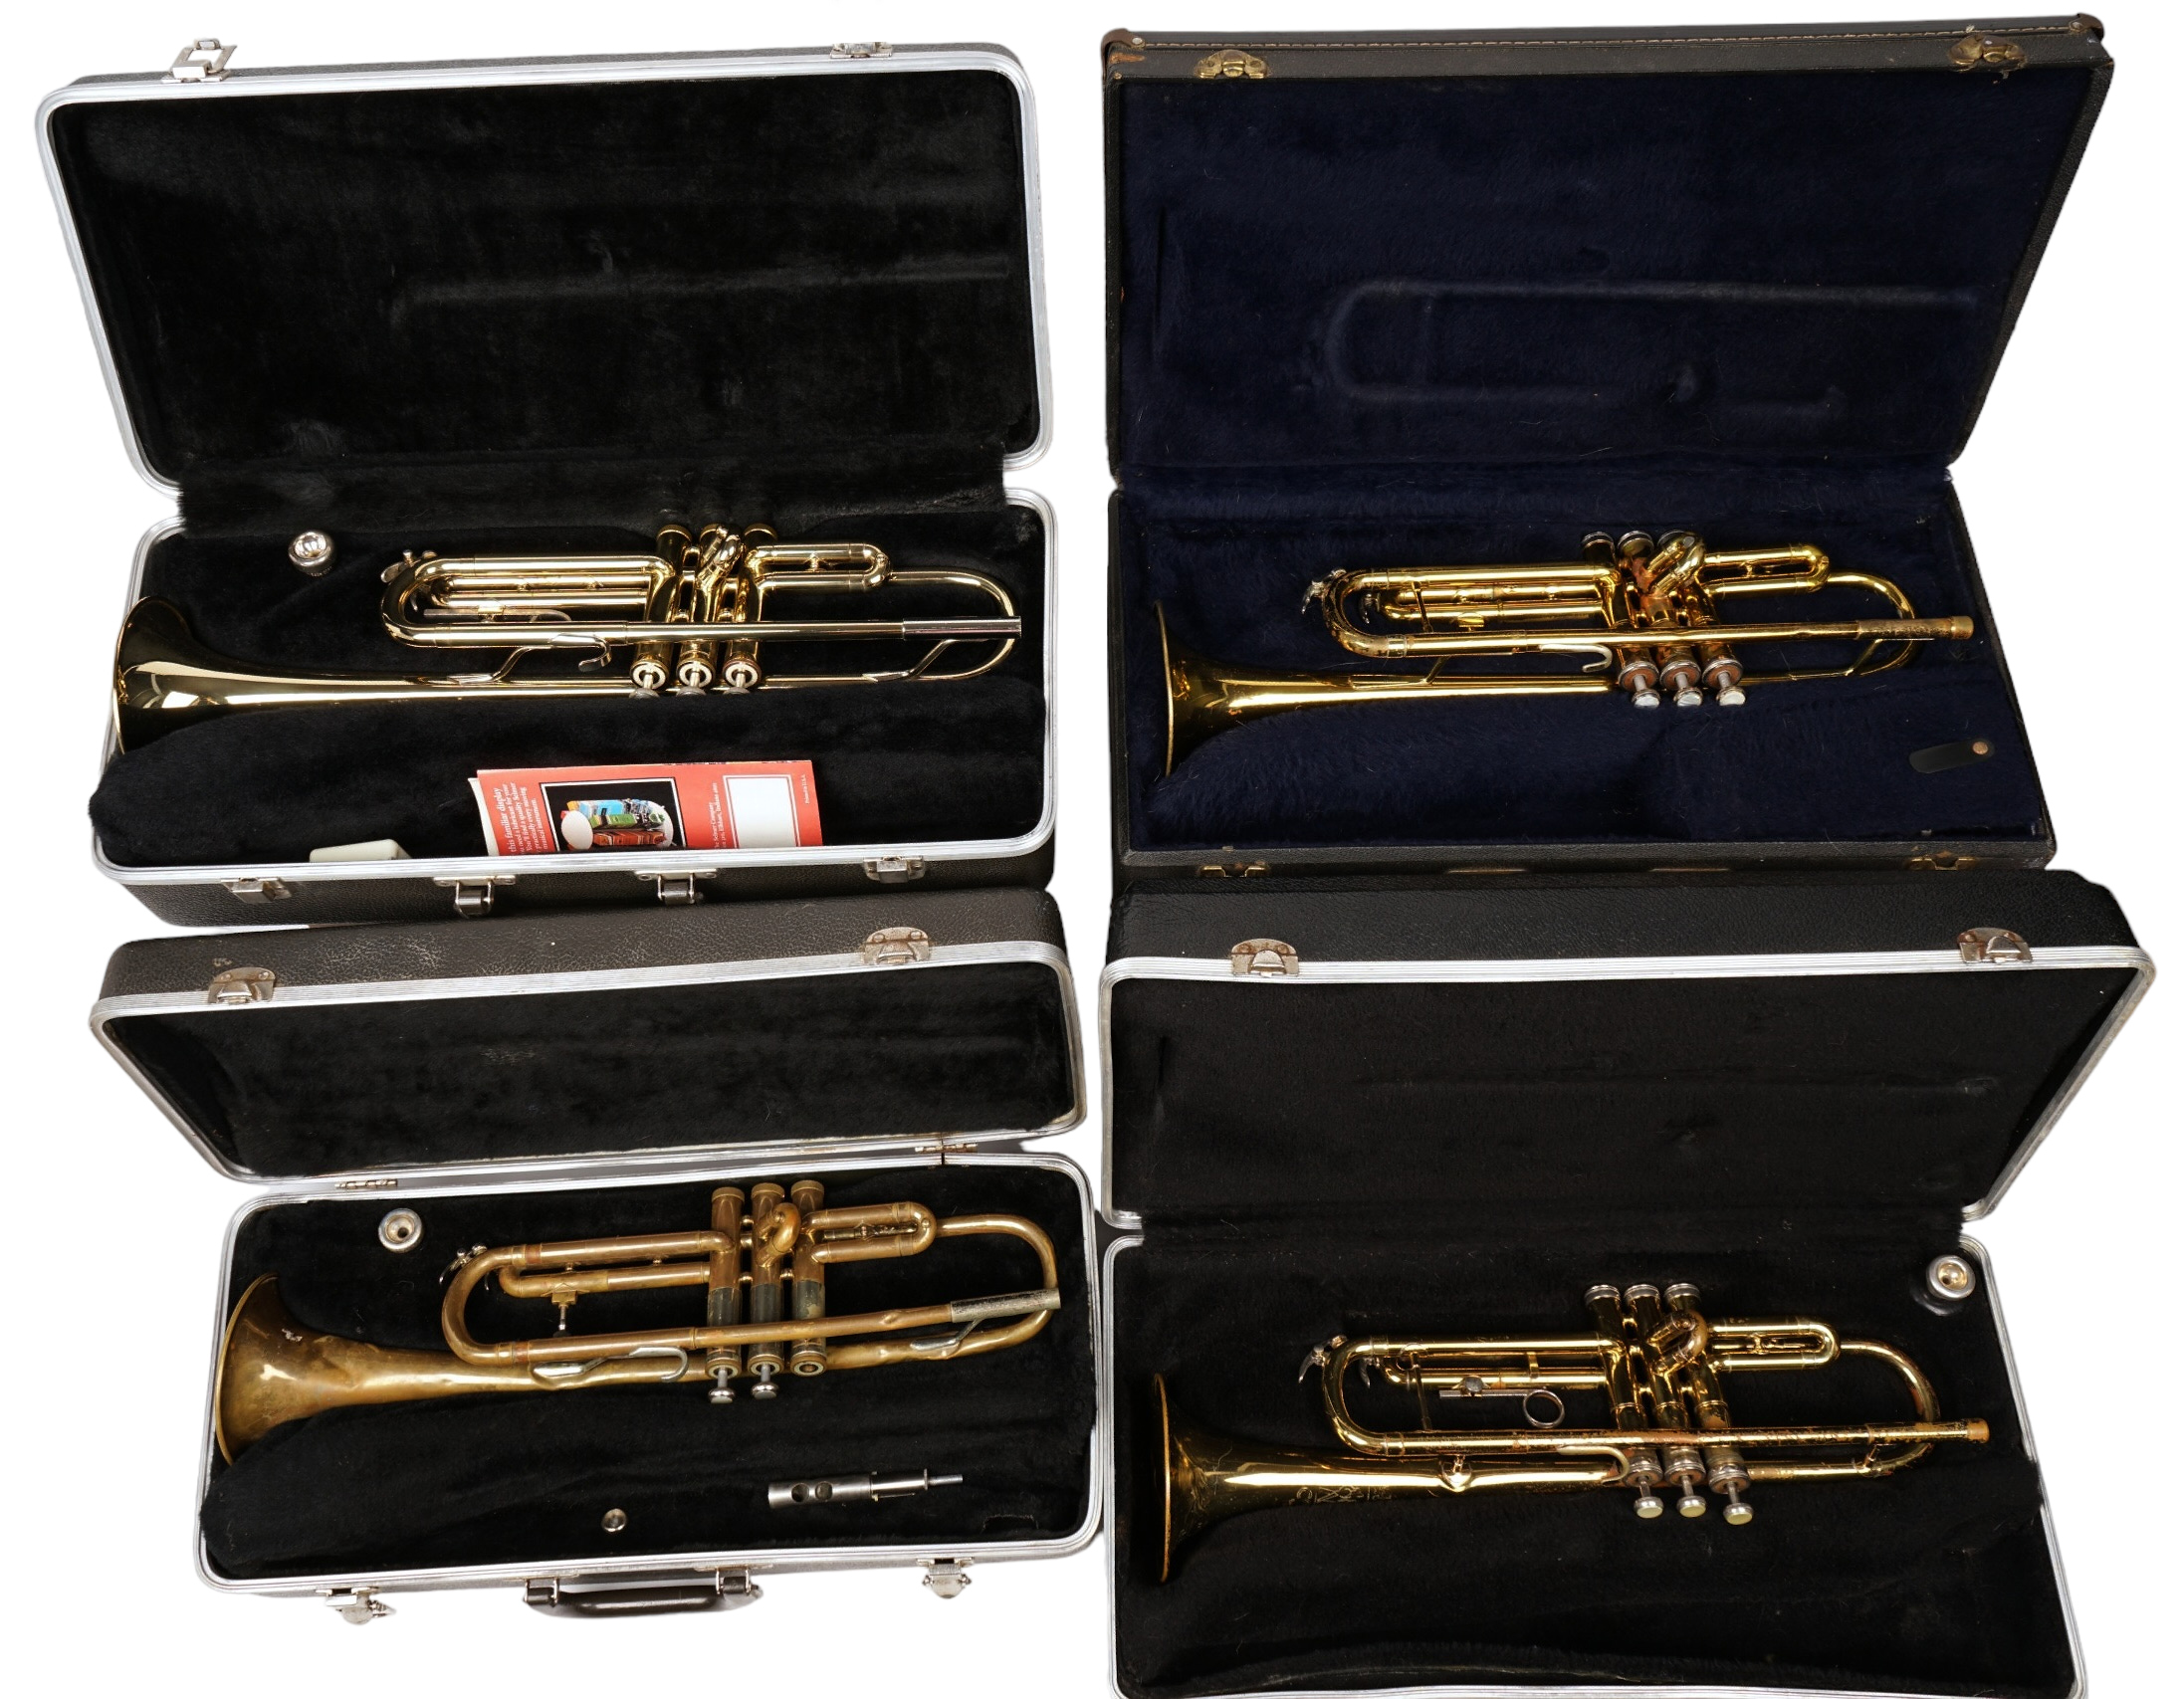  4 Trumpets c o Conn serial GL620438 2e22ae